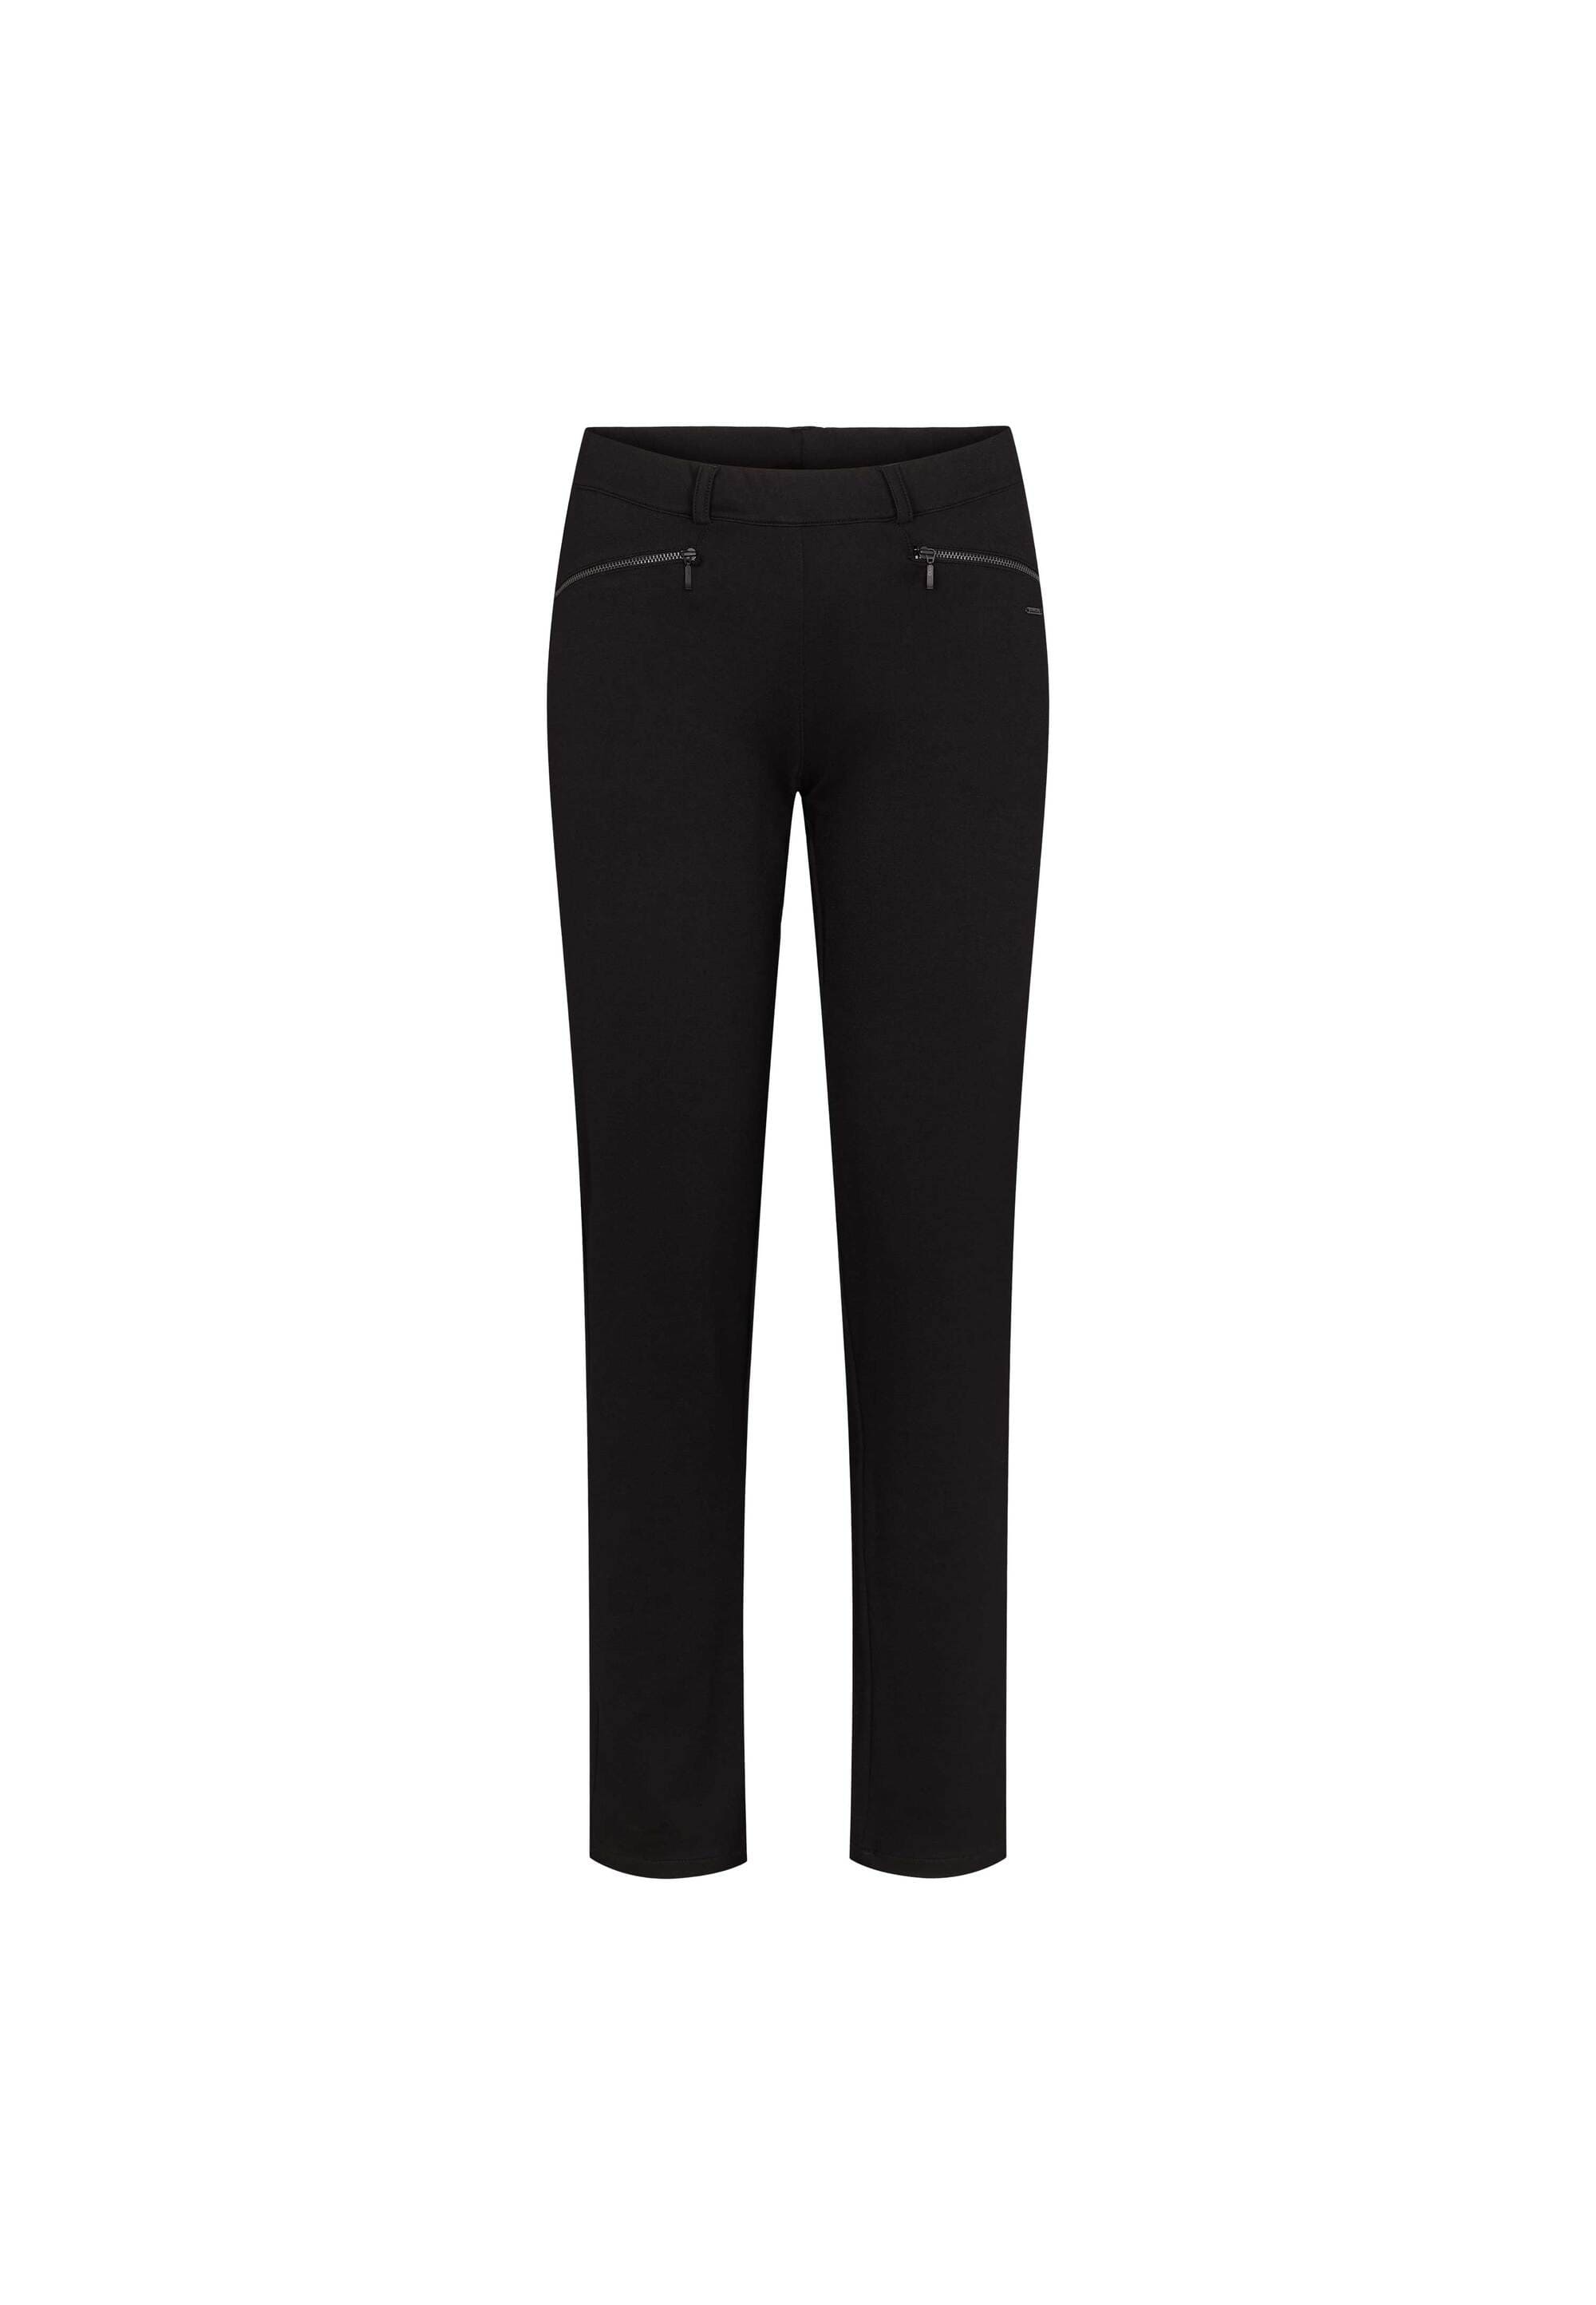 LAURIE  Rylie Regular - Short Length Trousers REGULAR 99147 Black